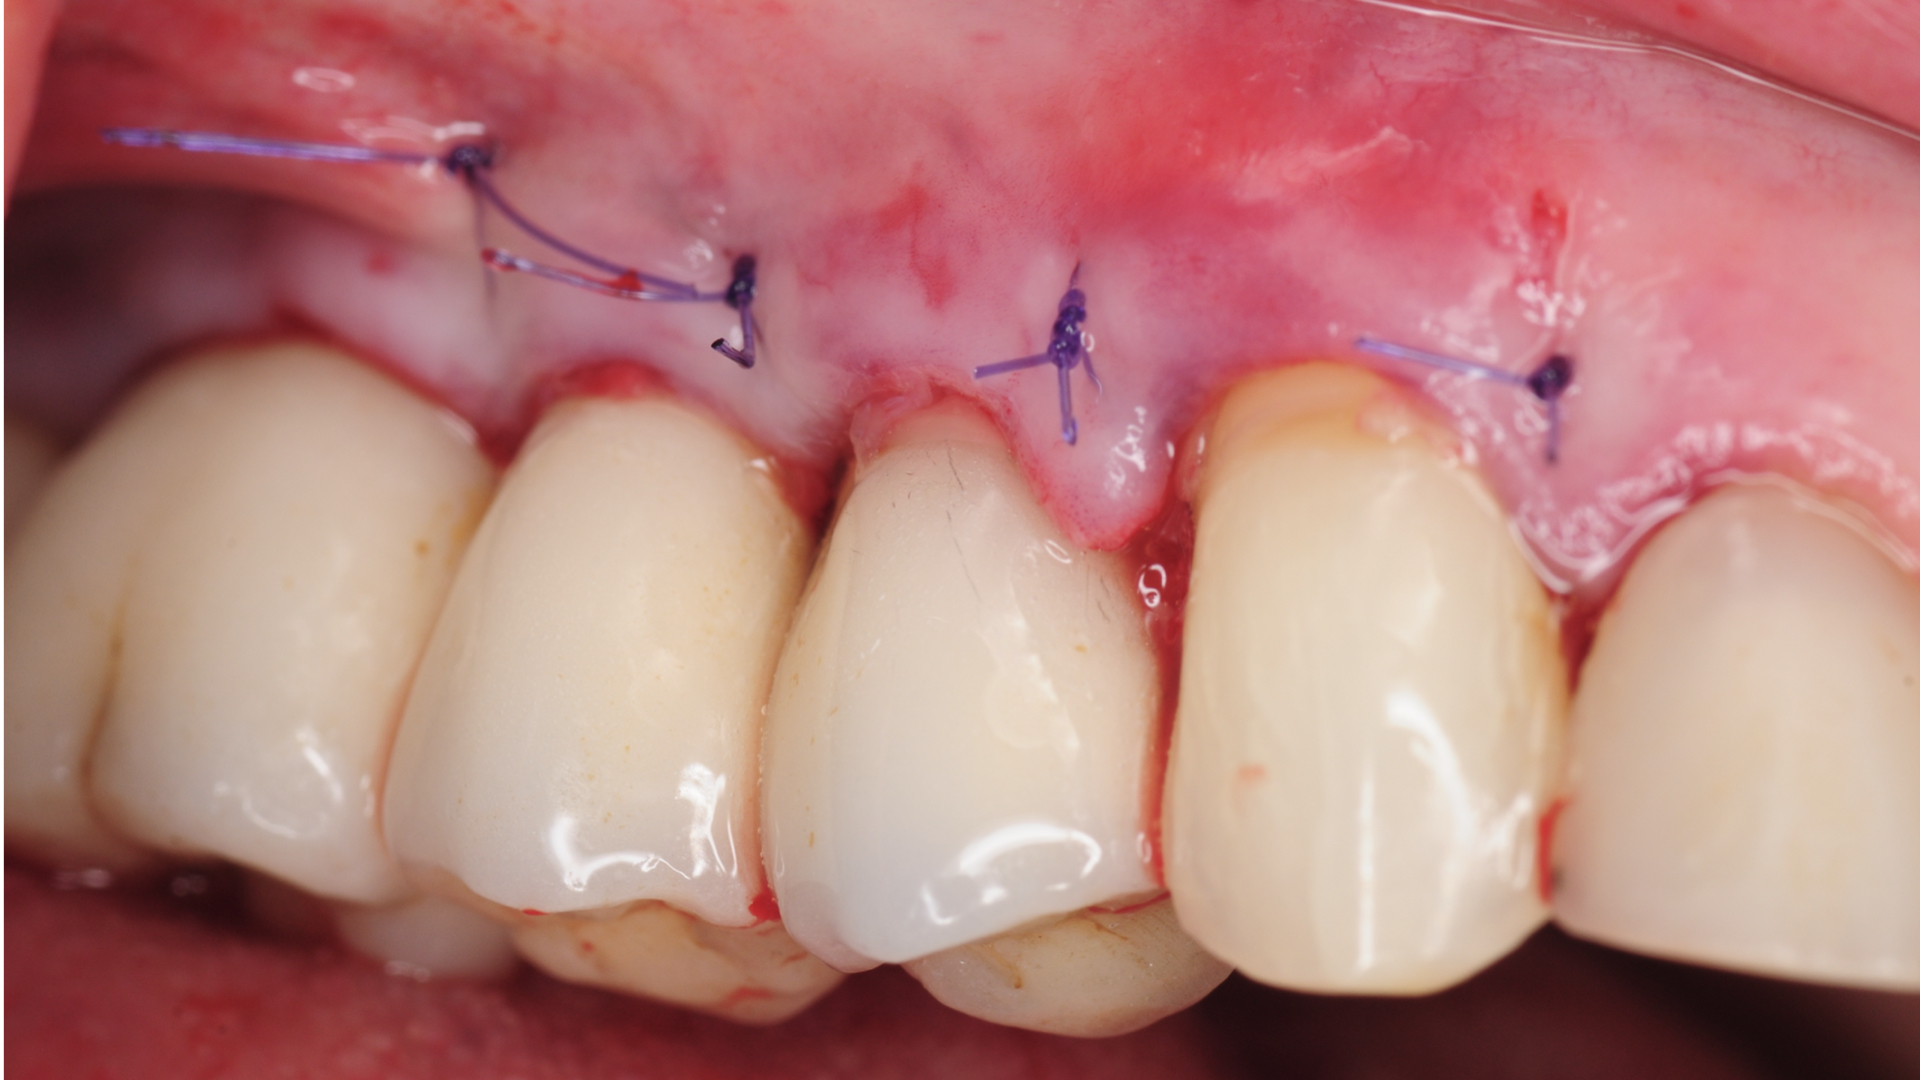 chronic-pain-dental-implant-peri-implantitis-mucositis-airflow-prophylaxis-master-kazemi-oral-surgery-11